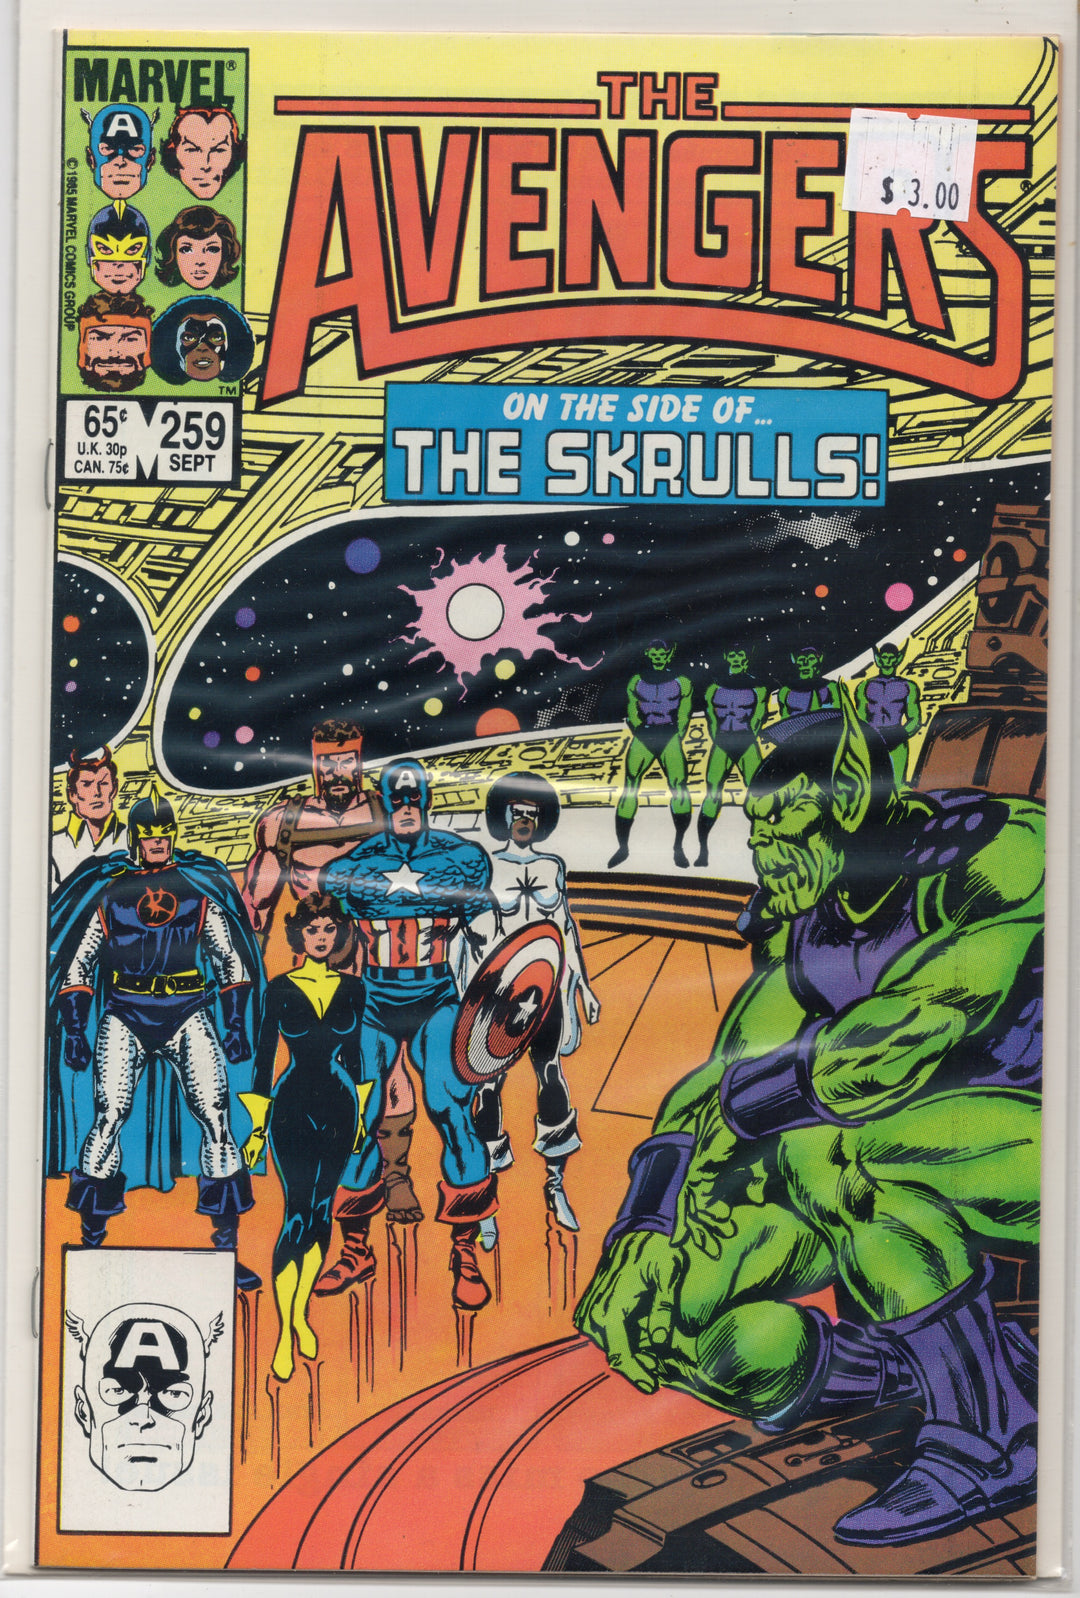 The Avengers #259